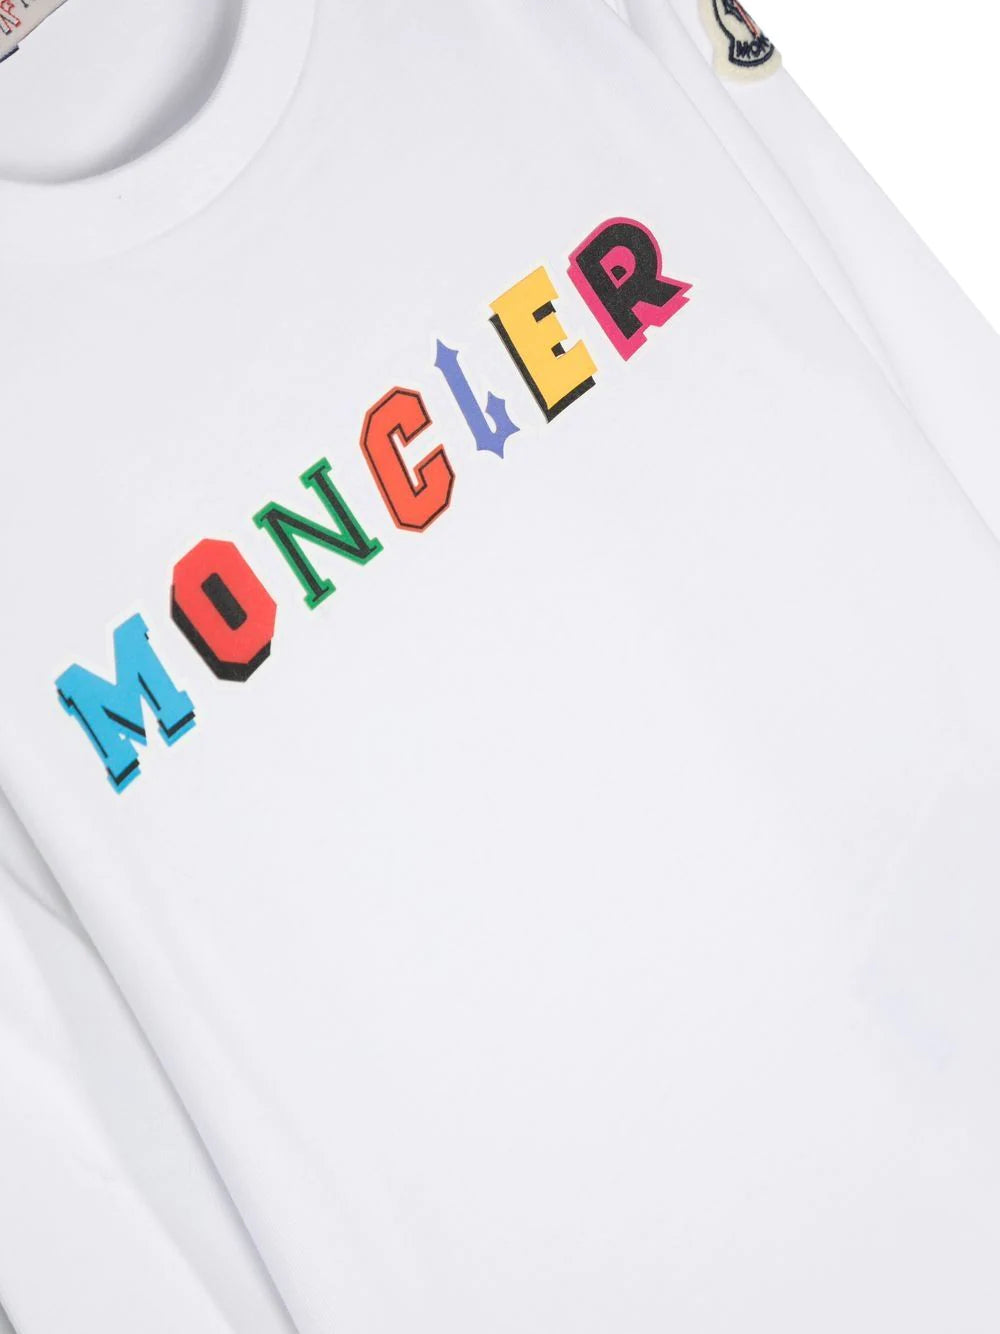 MONCLER BABY Logo Font Print T-Shirt White - MAISONDEFASHION.COM